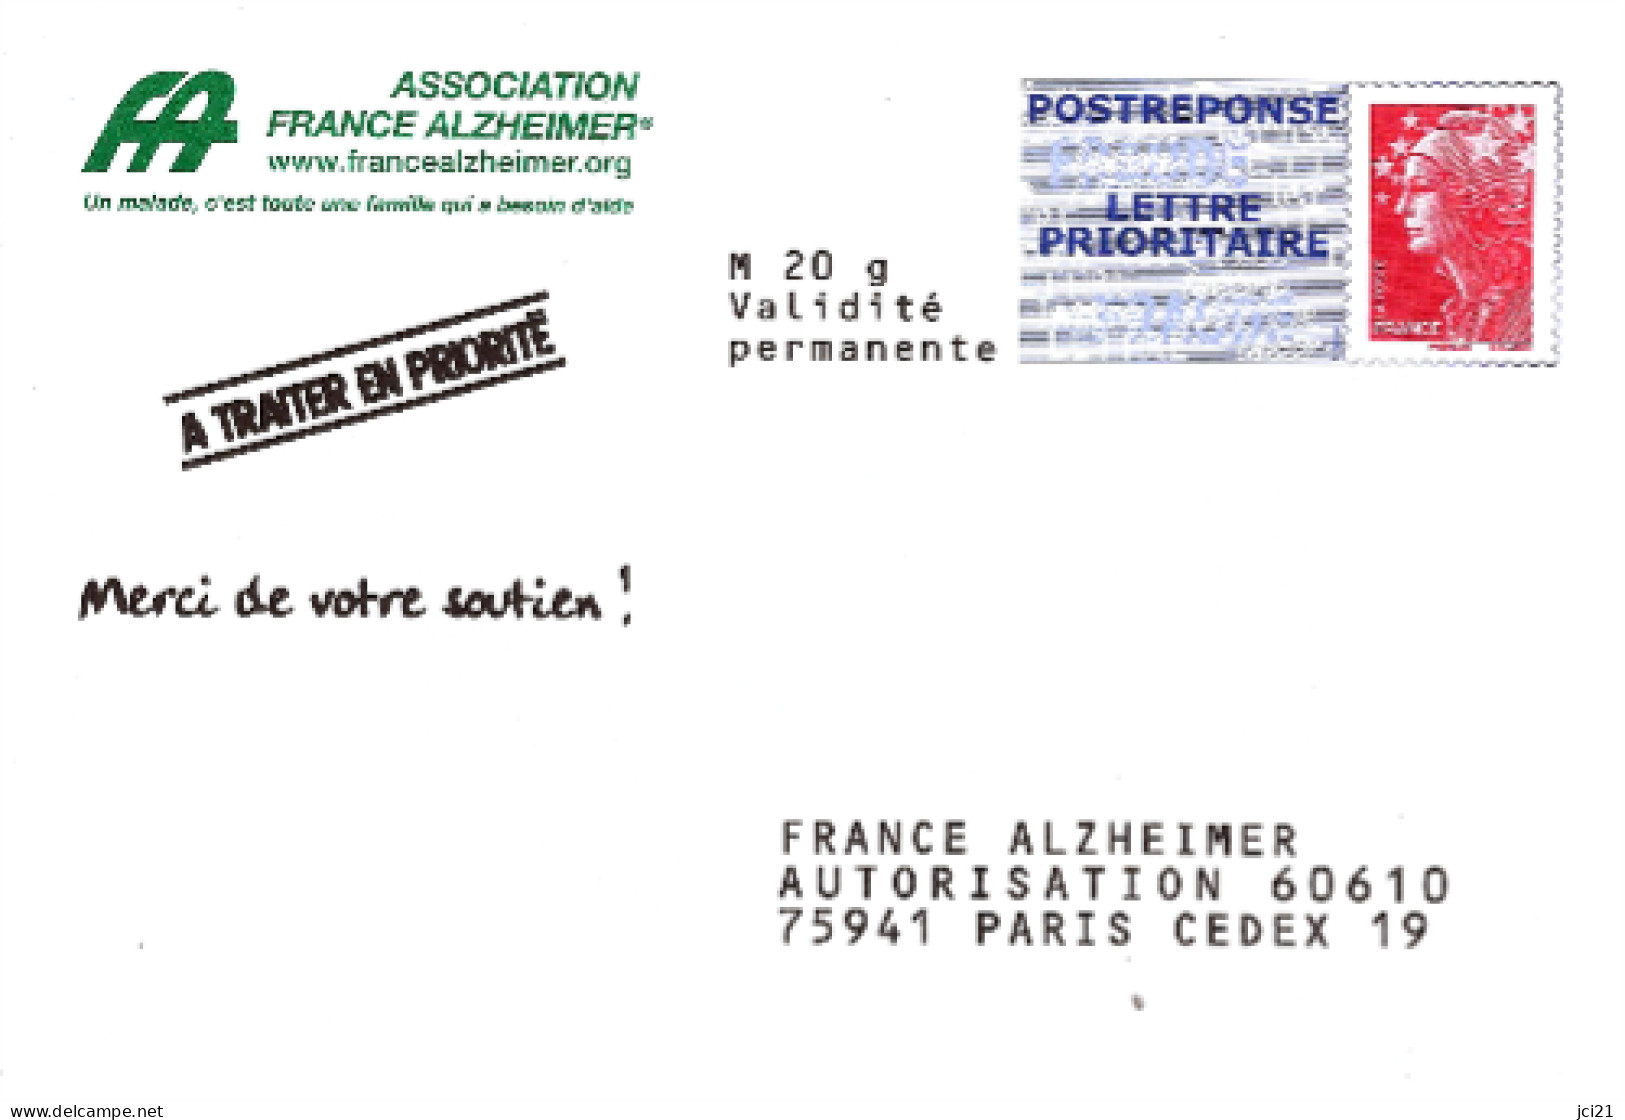 LOT DE 2 PAP BEAUJARD POSTREPONSE LETTRE PRIORITAIRE PHIL@POSTE-FRANCE ALZHEIMER- NEUVES (782)_P214 - Listos Para Enviar: Transplantes/Beaujard